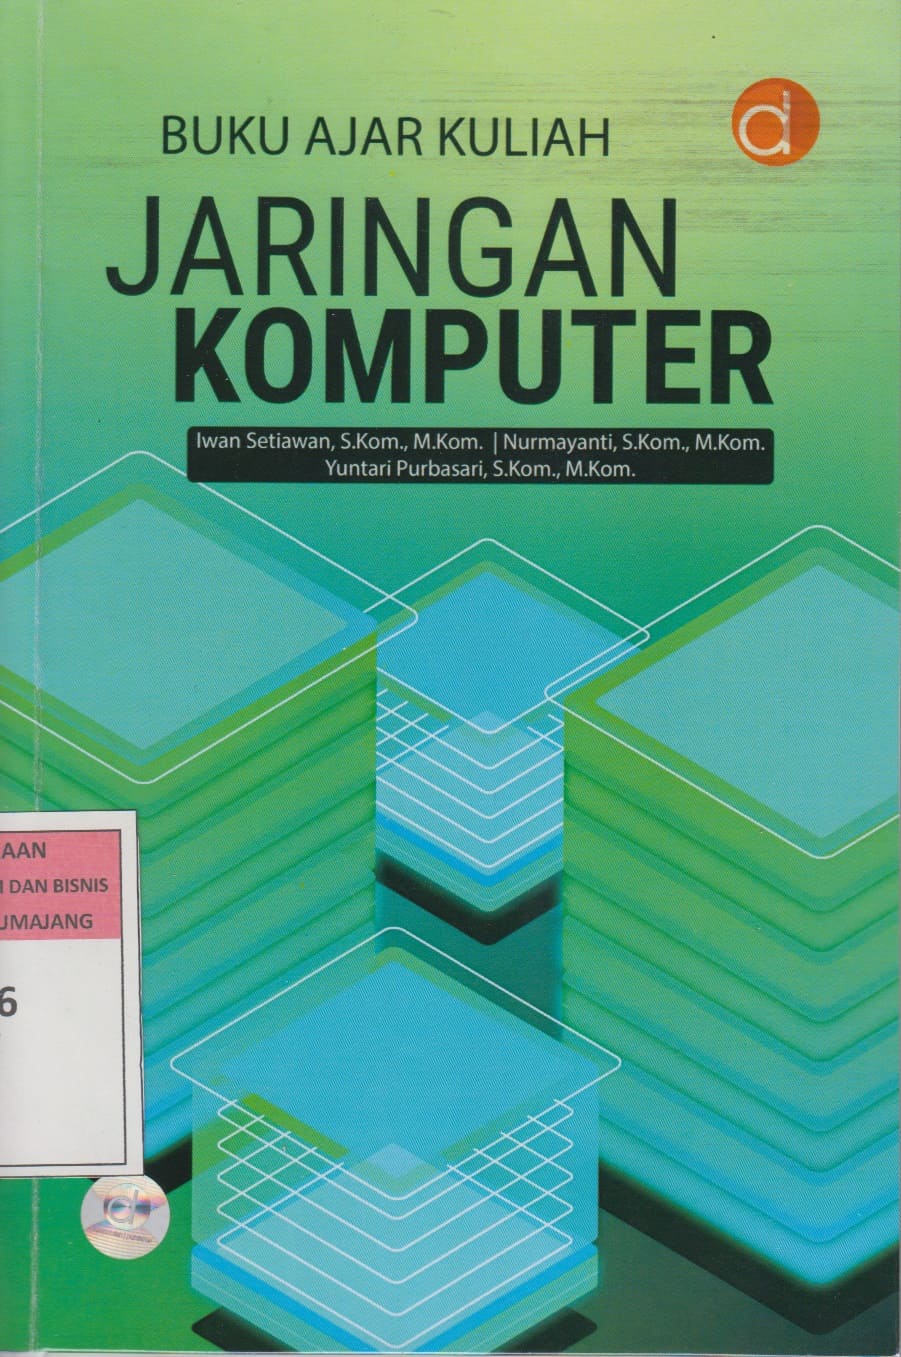 Buku ajar kuliah jaringan komputer